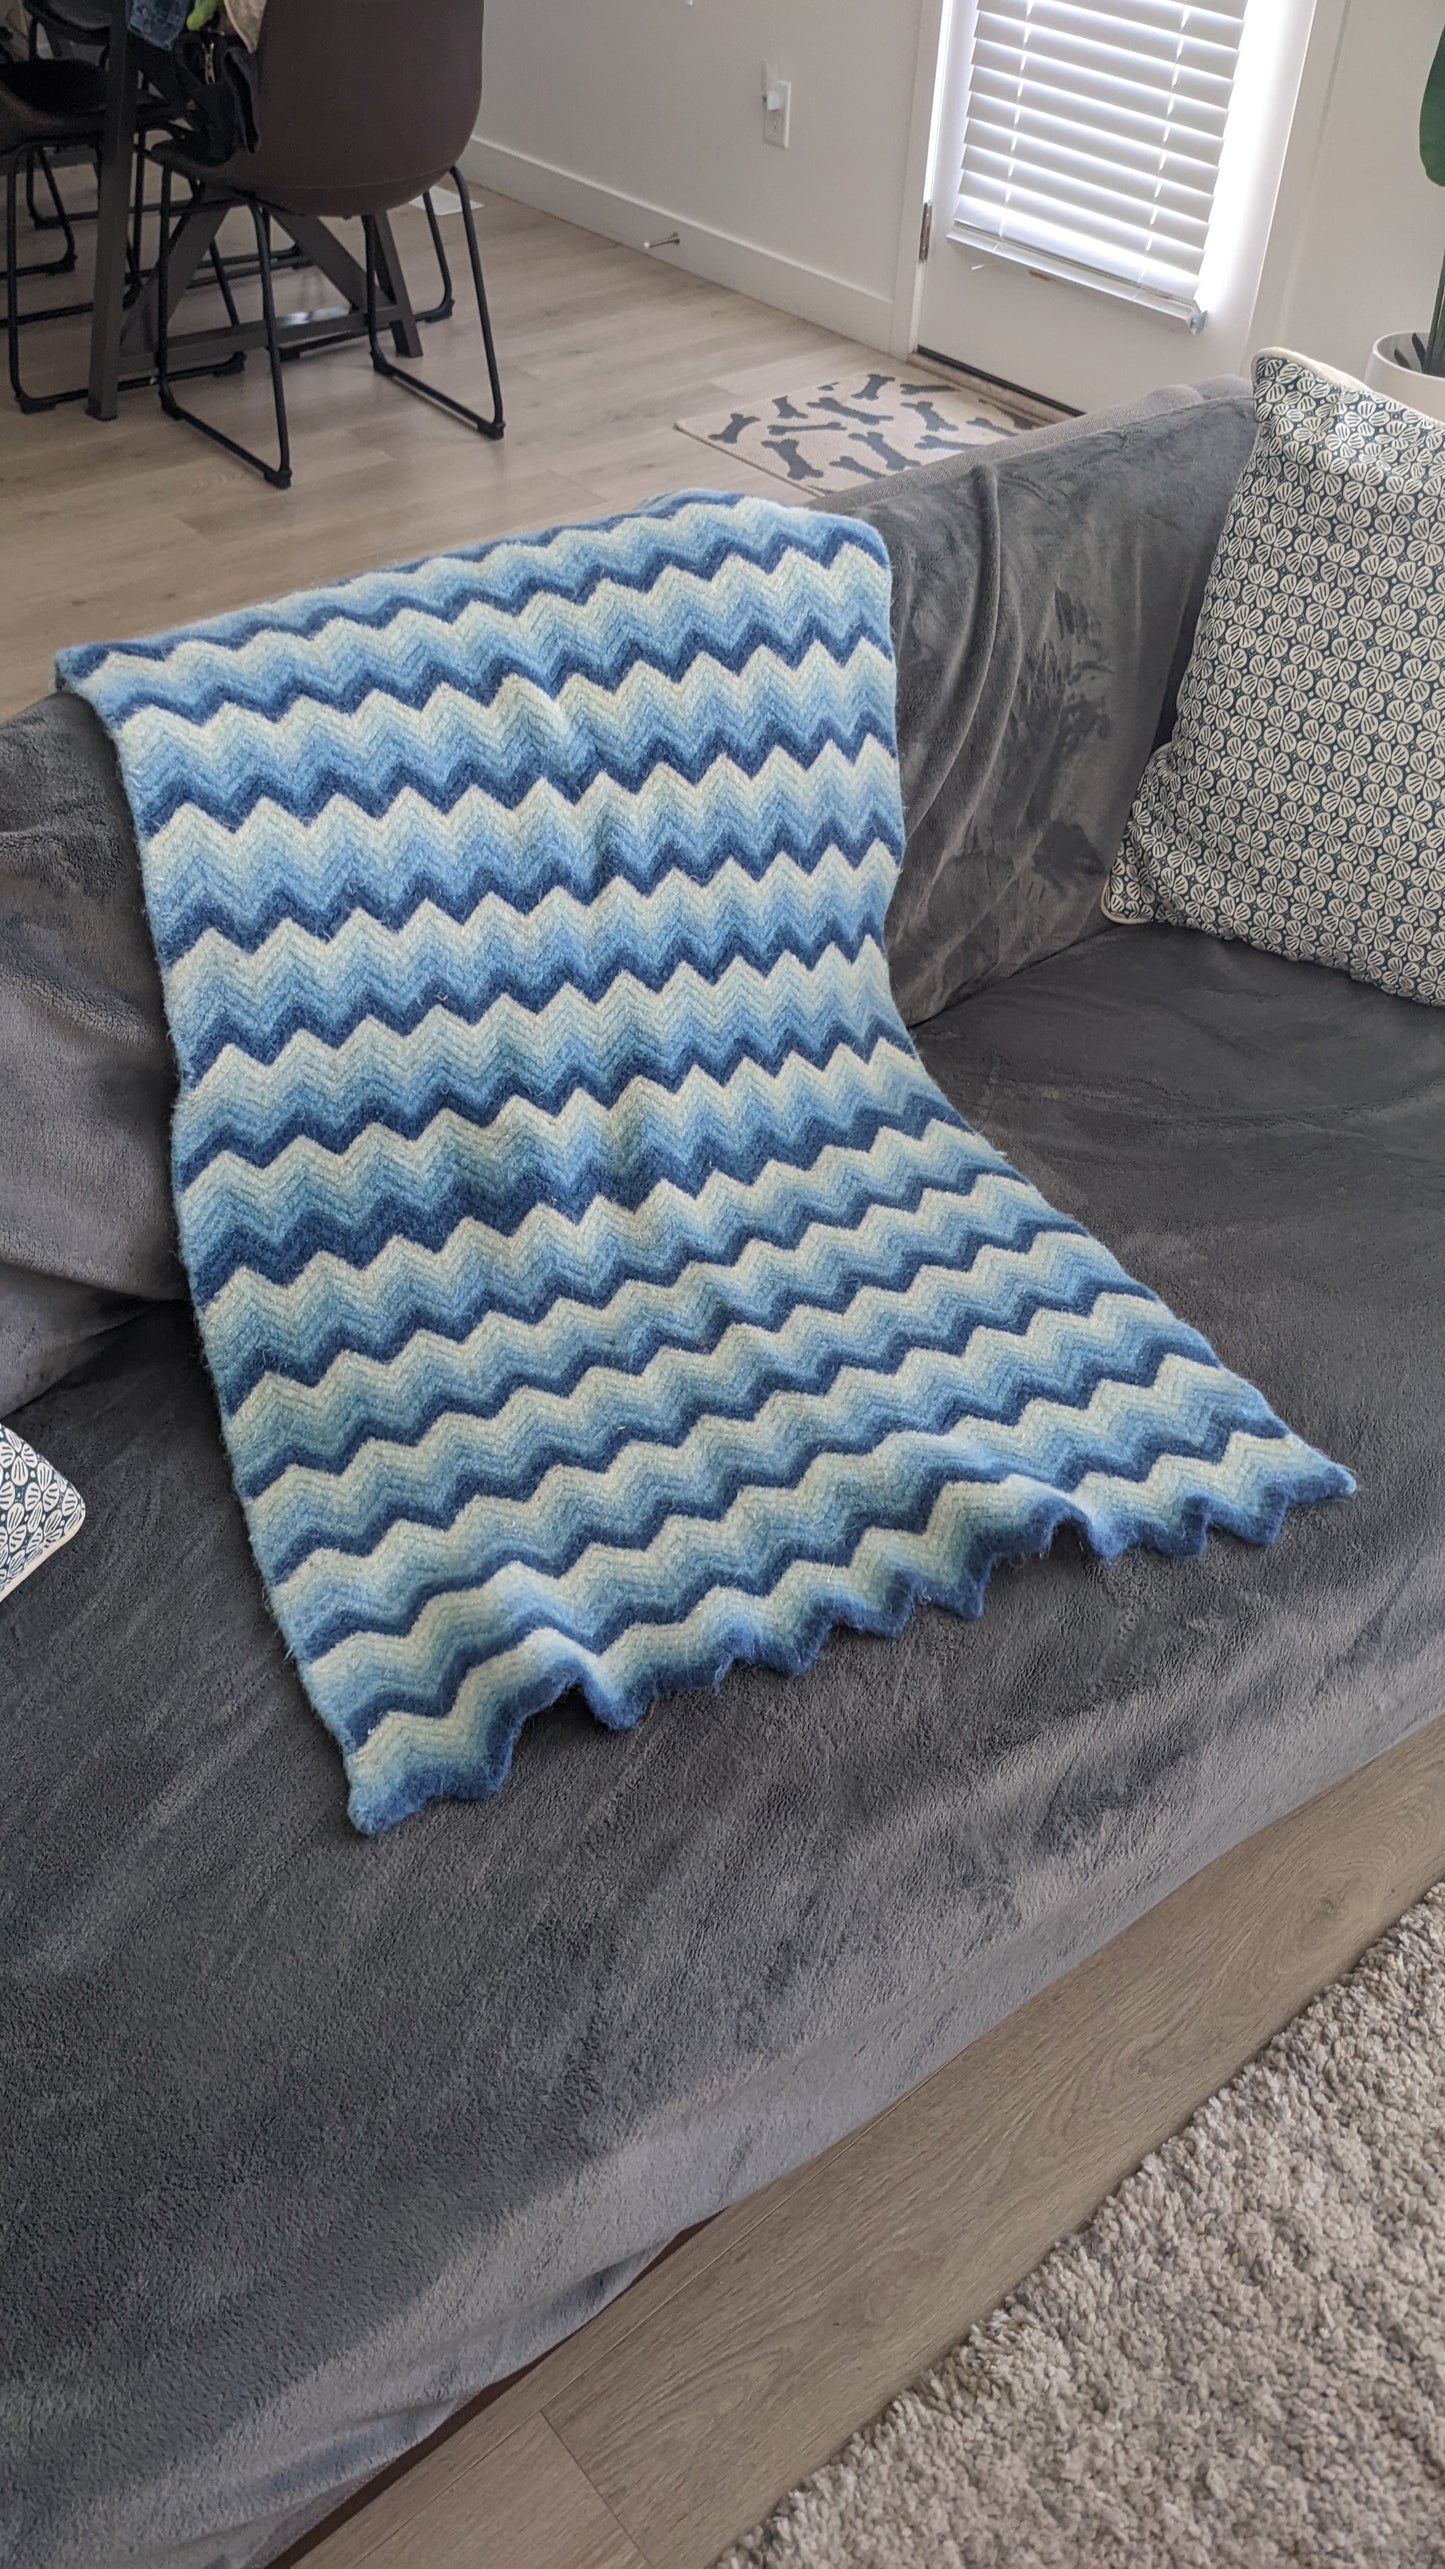 Handmade Hand-Woven Blue ZigZag Wool Rug, Throw, Blanket. 44"x27"